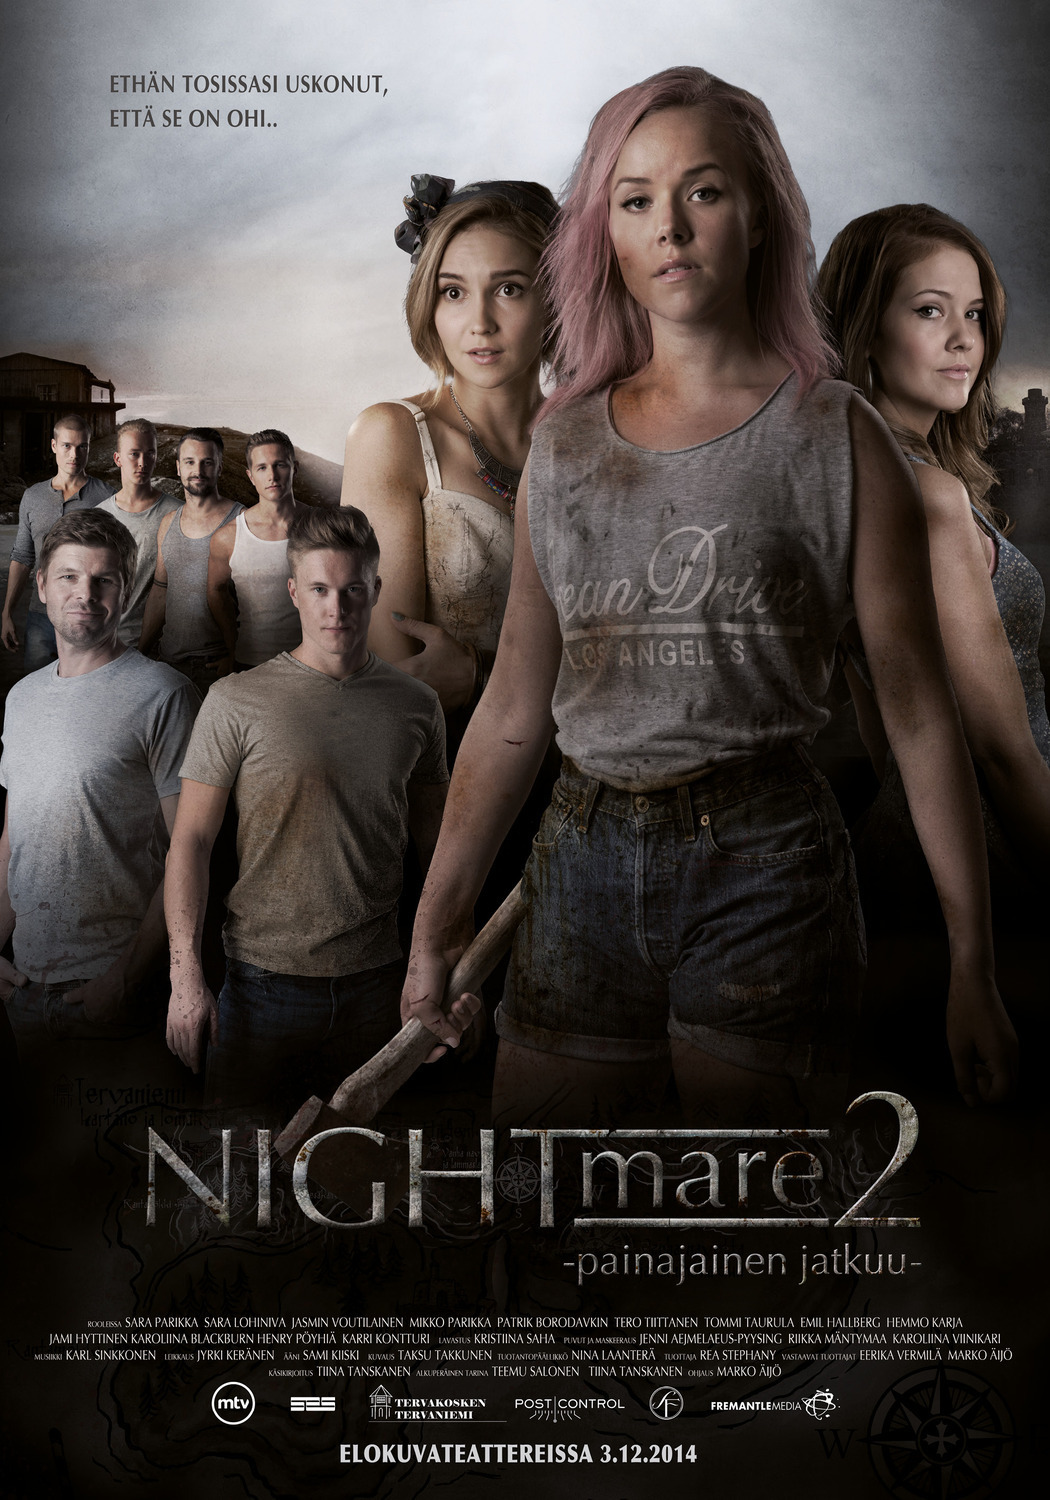 Extra Large Movie Poster Image for Nightmare 2 - painajainen jatkuu 